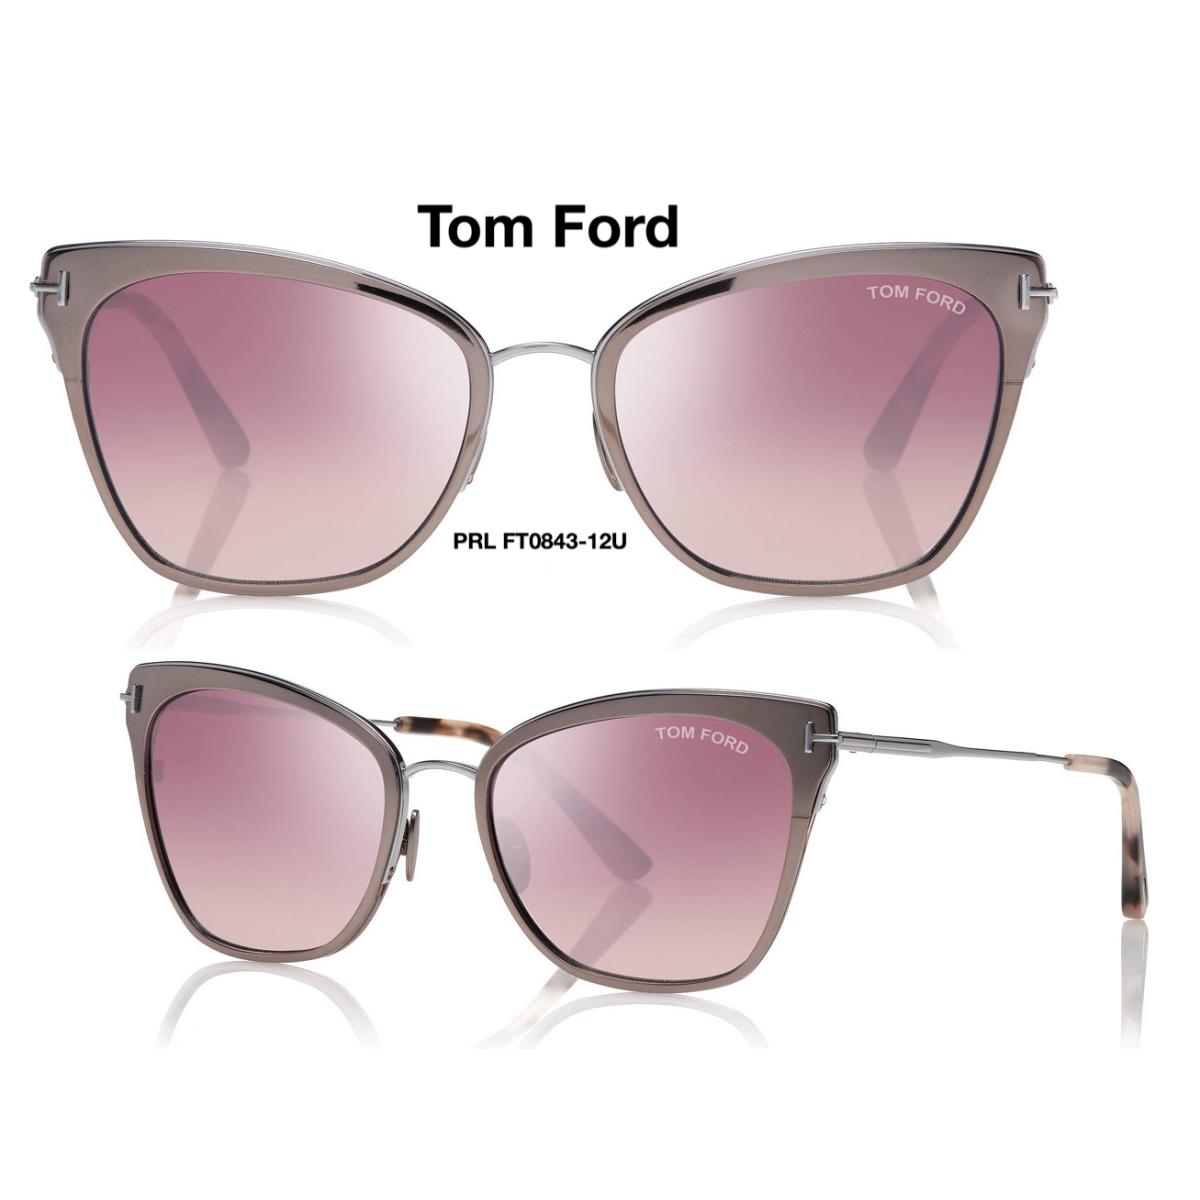 Tom Ford TF 843 12U Faryn Sunglasses Ruthenium FT 843 12U - Frame: , Lens: Bordeaux